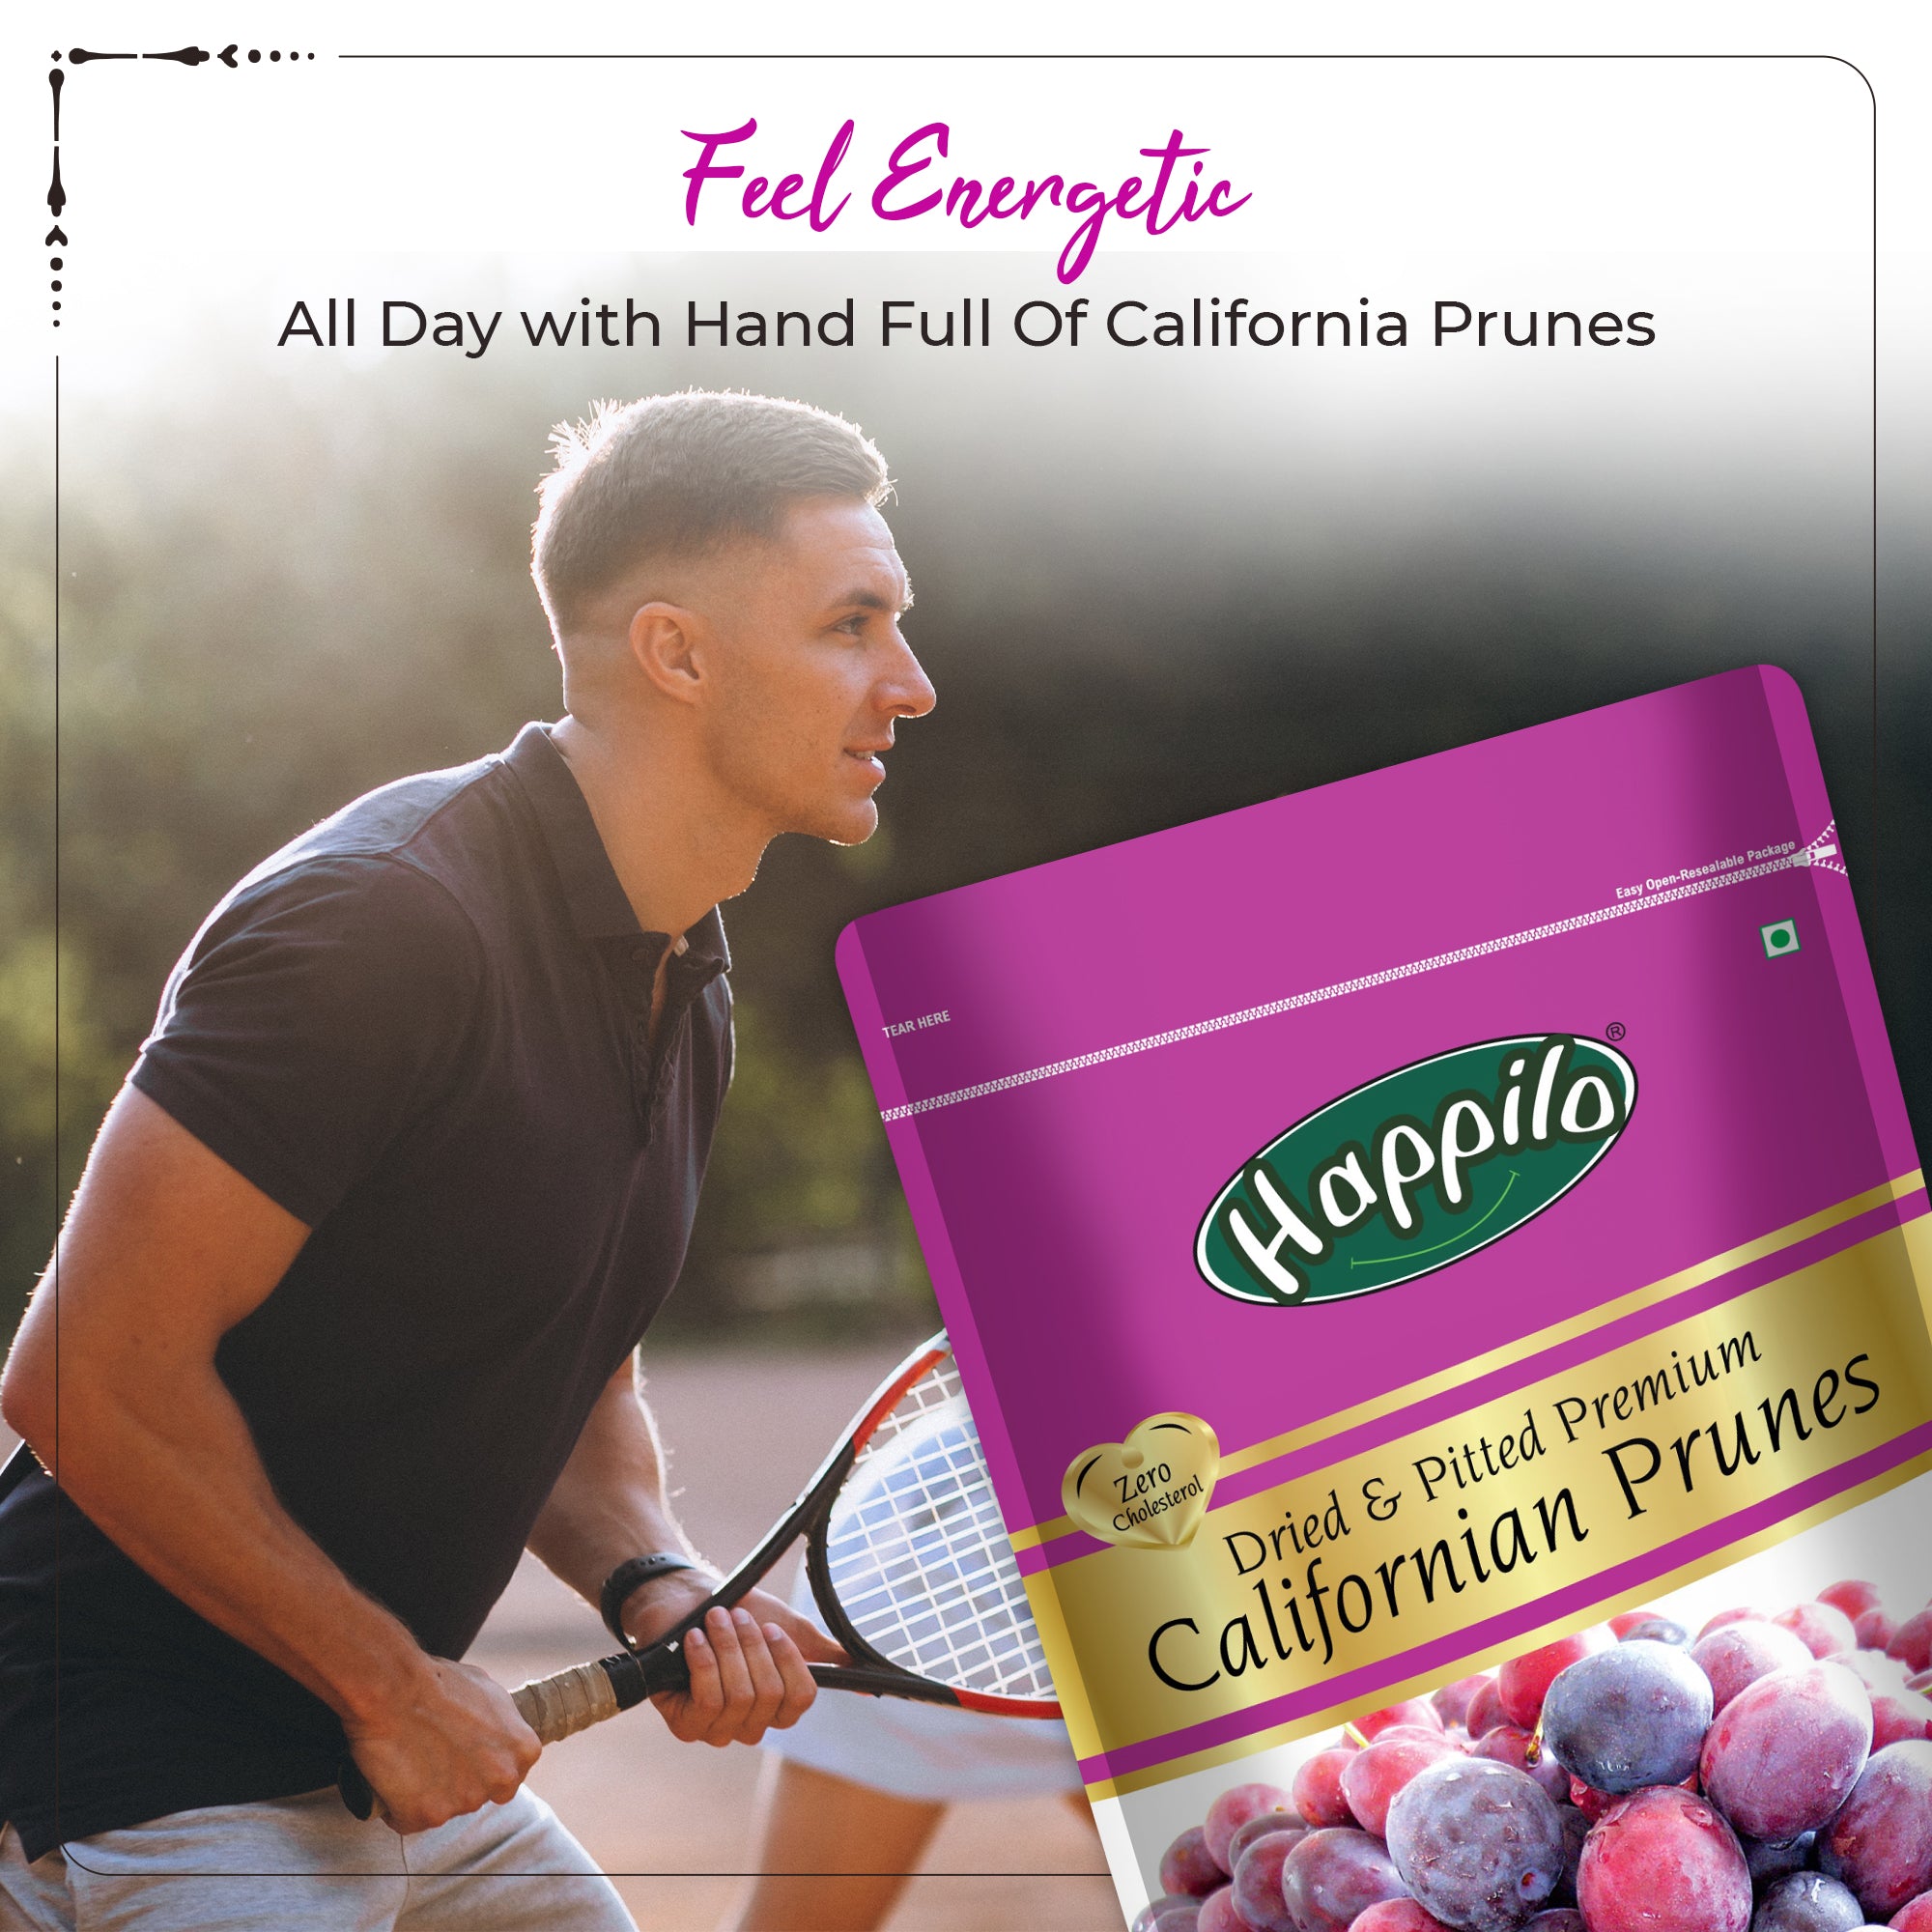 Happilo Premium Dried Californian Pitted Prunes